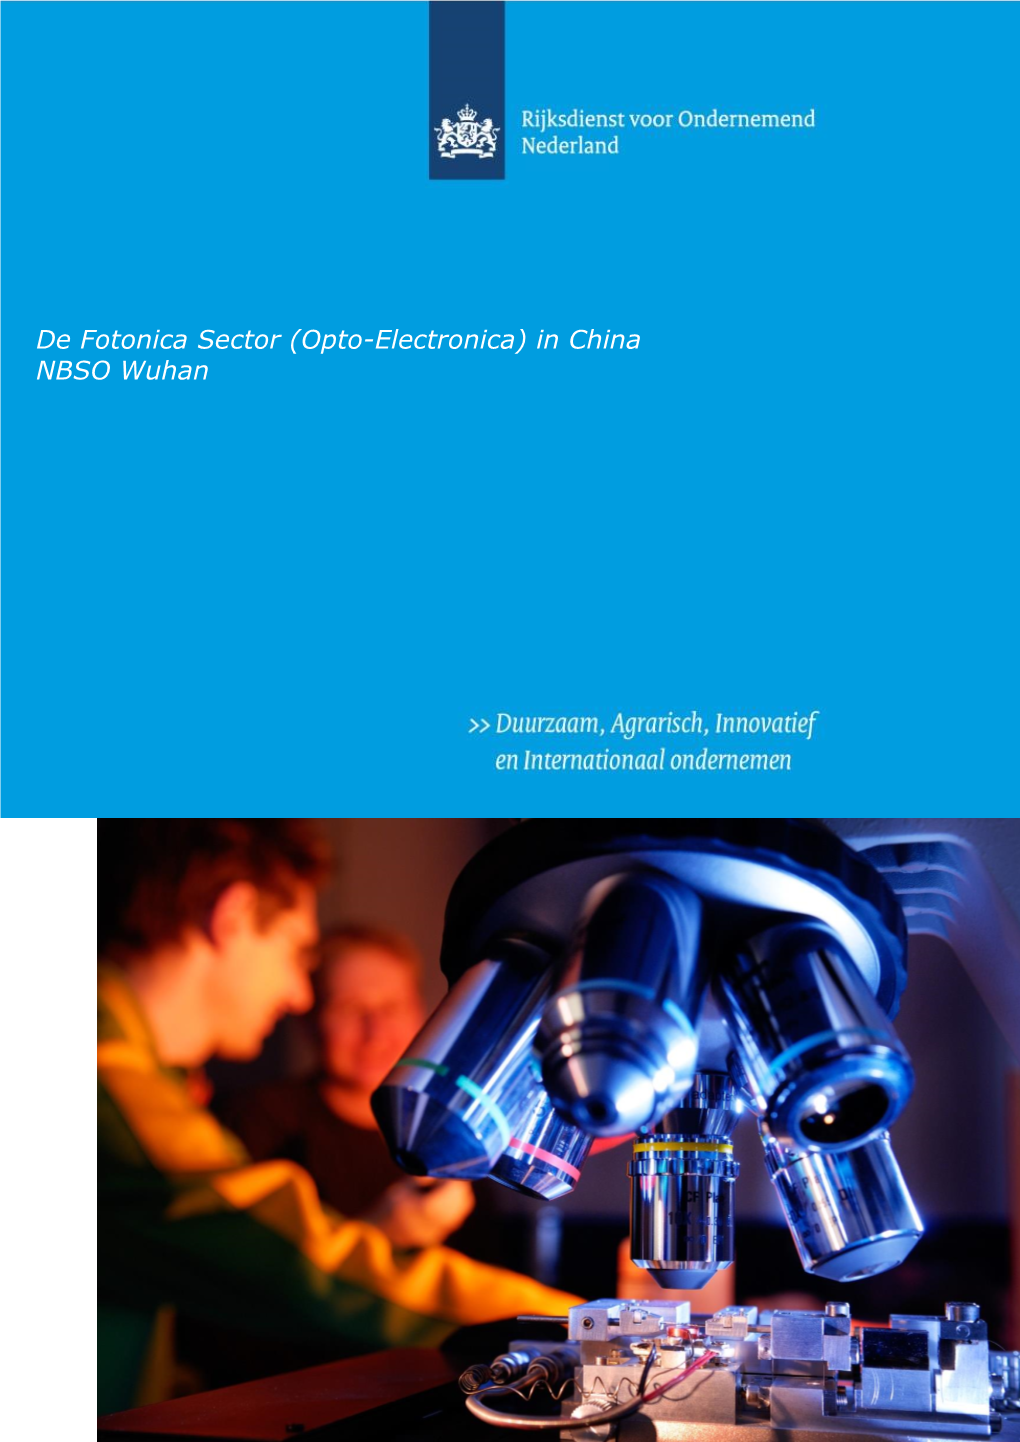 De Fotonica Sector (Opto-Electronica) in China NBSO Wuhan